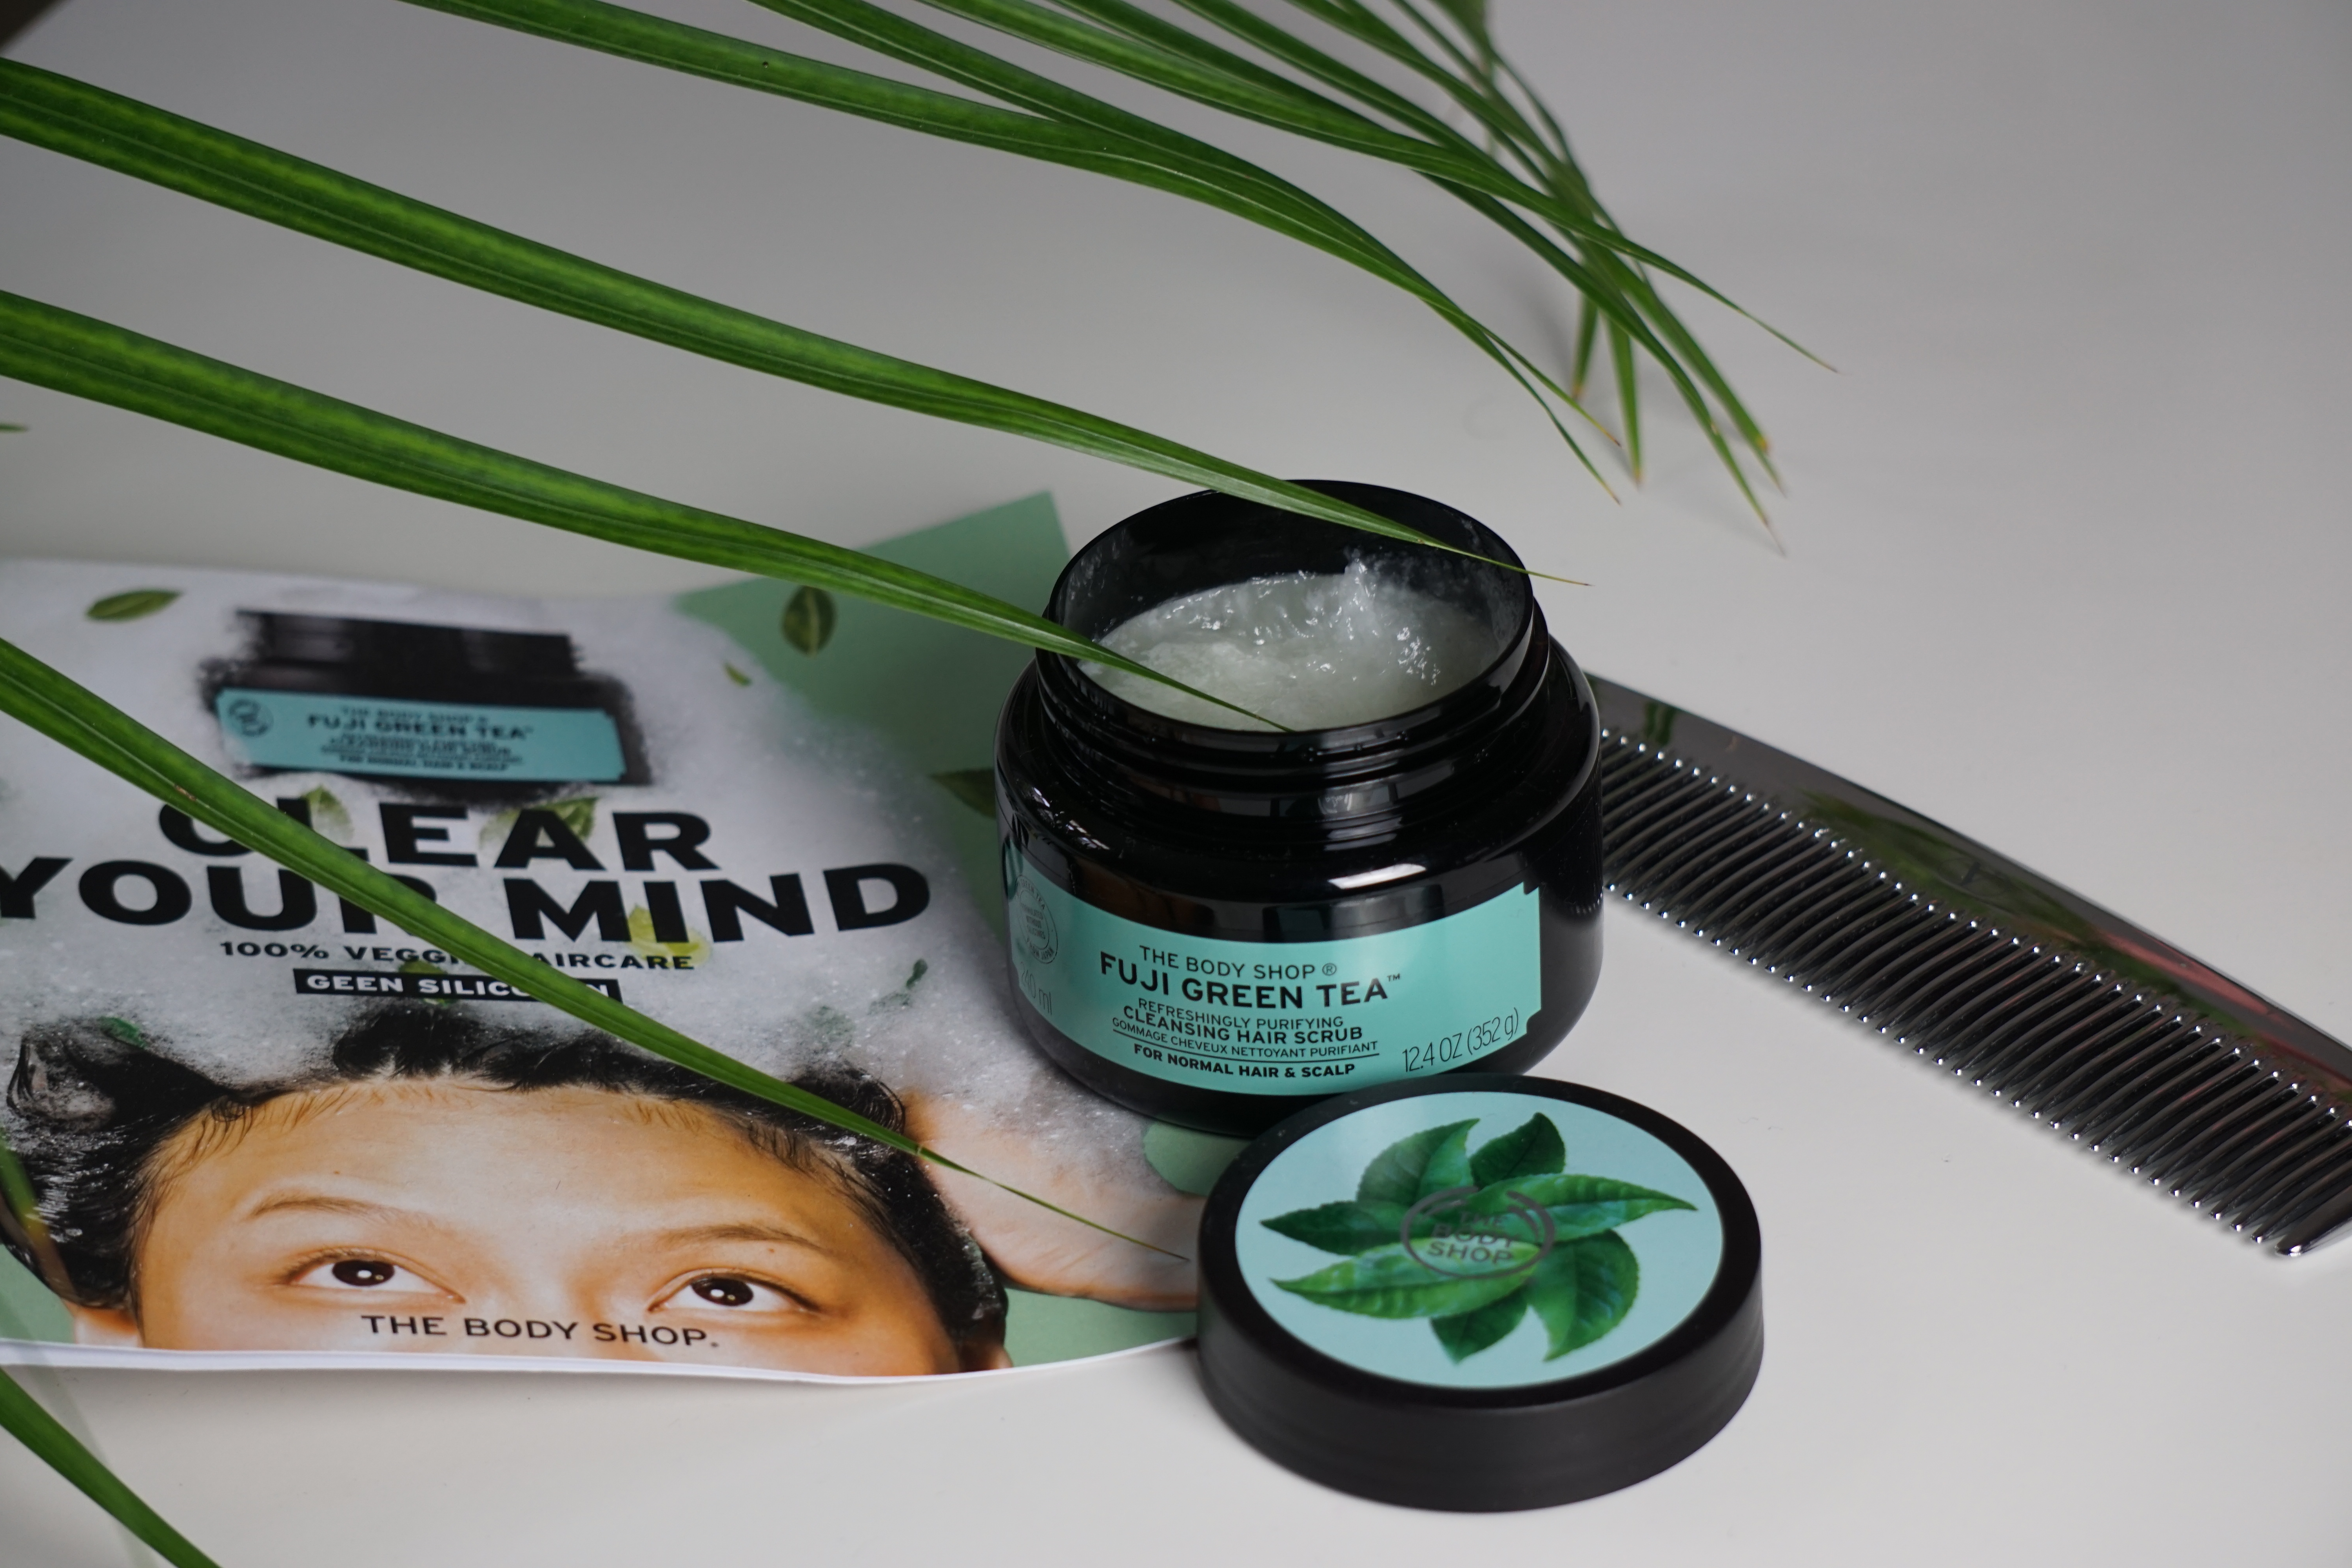 THE BODY SHOP – FUJI GREEN TEA CLEANSING HAIR SCRUB